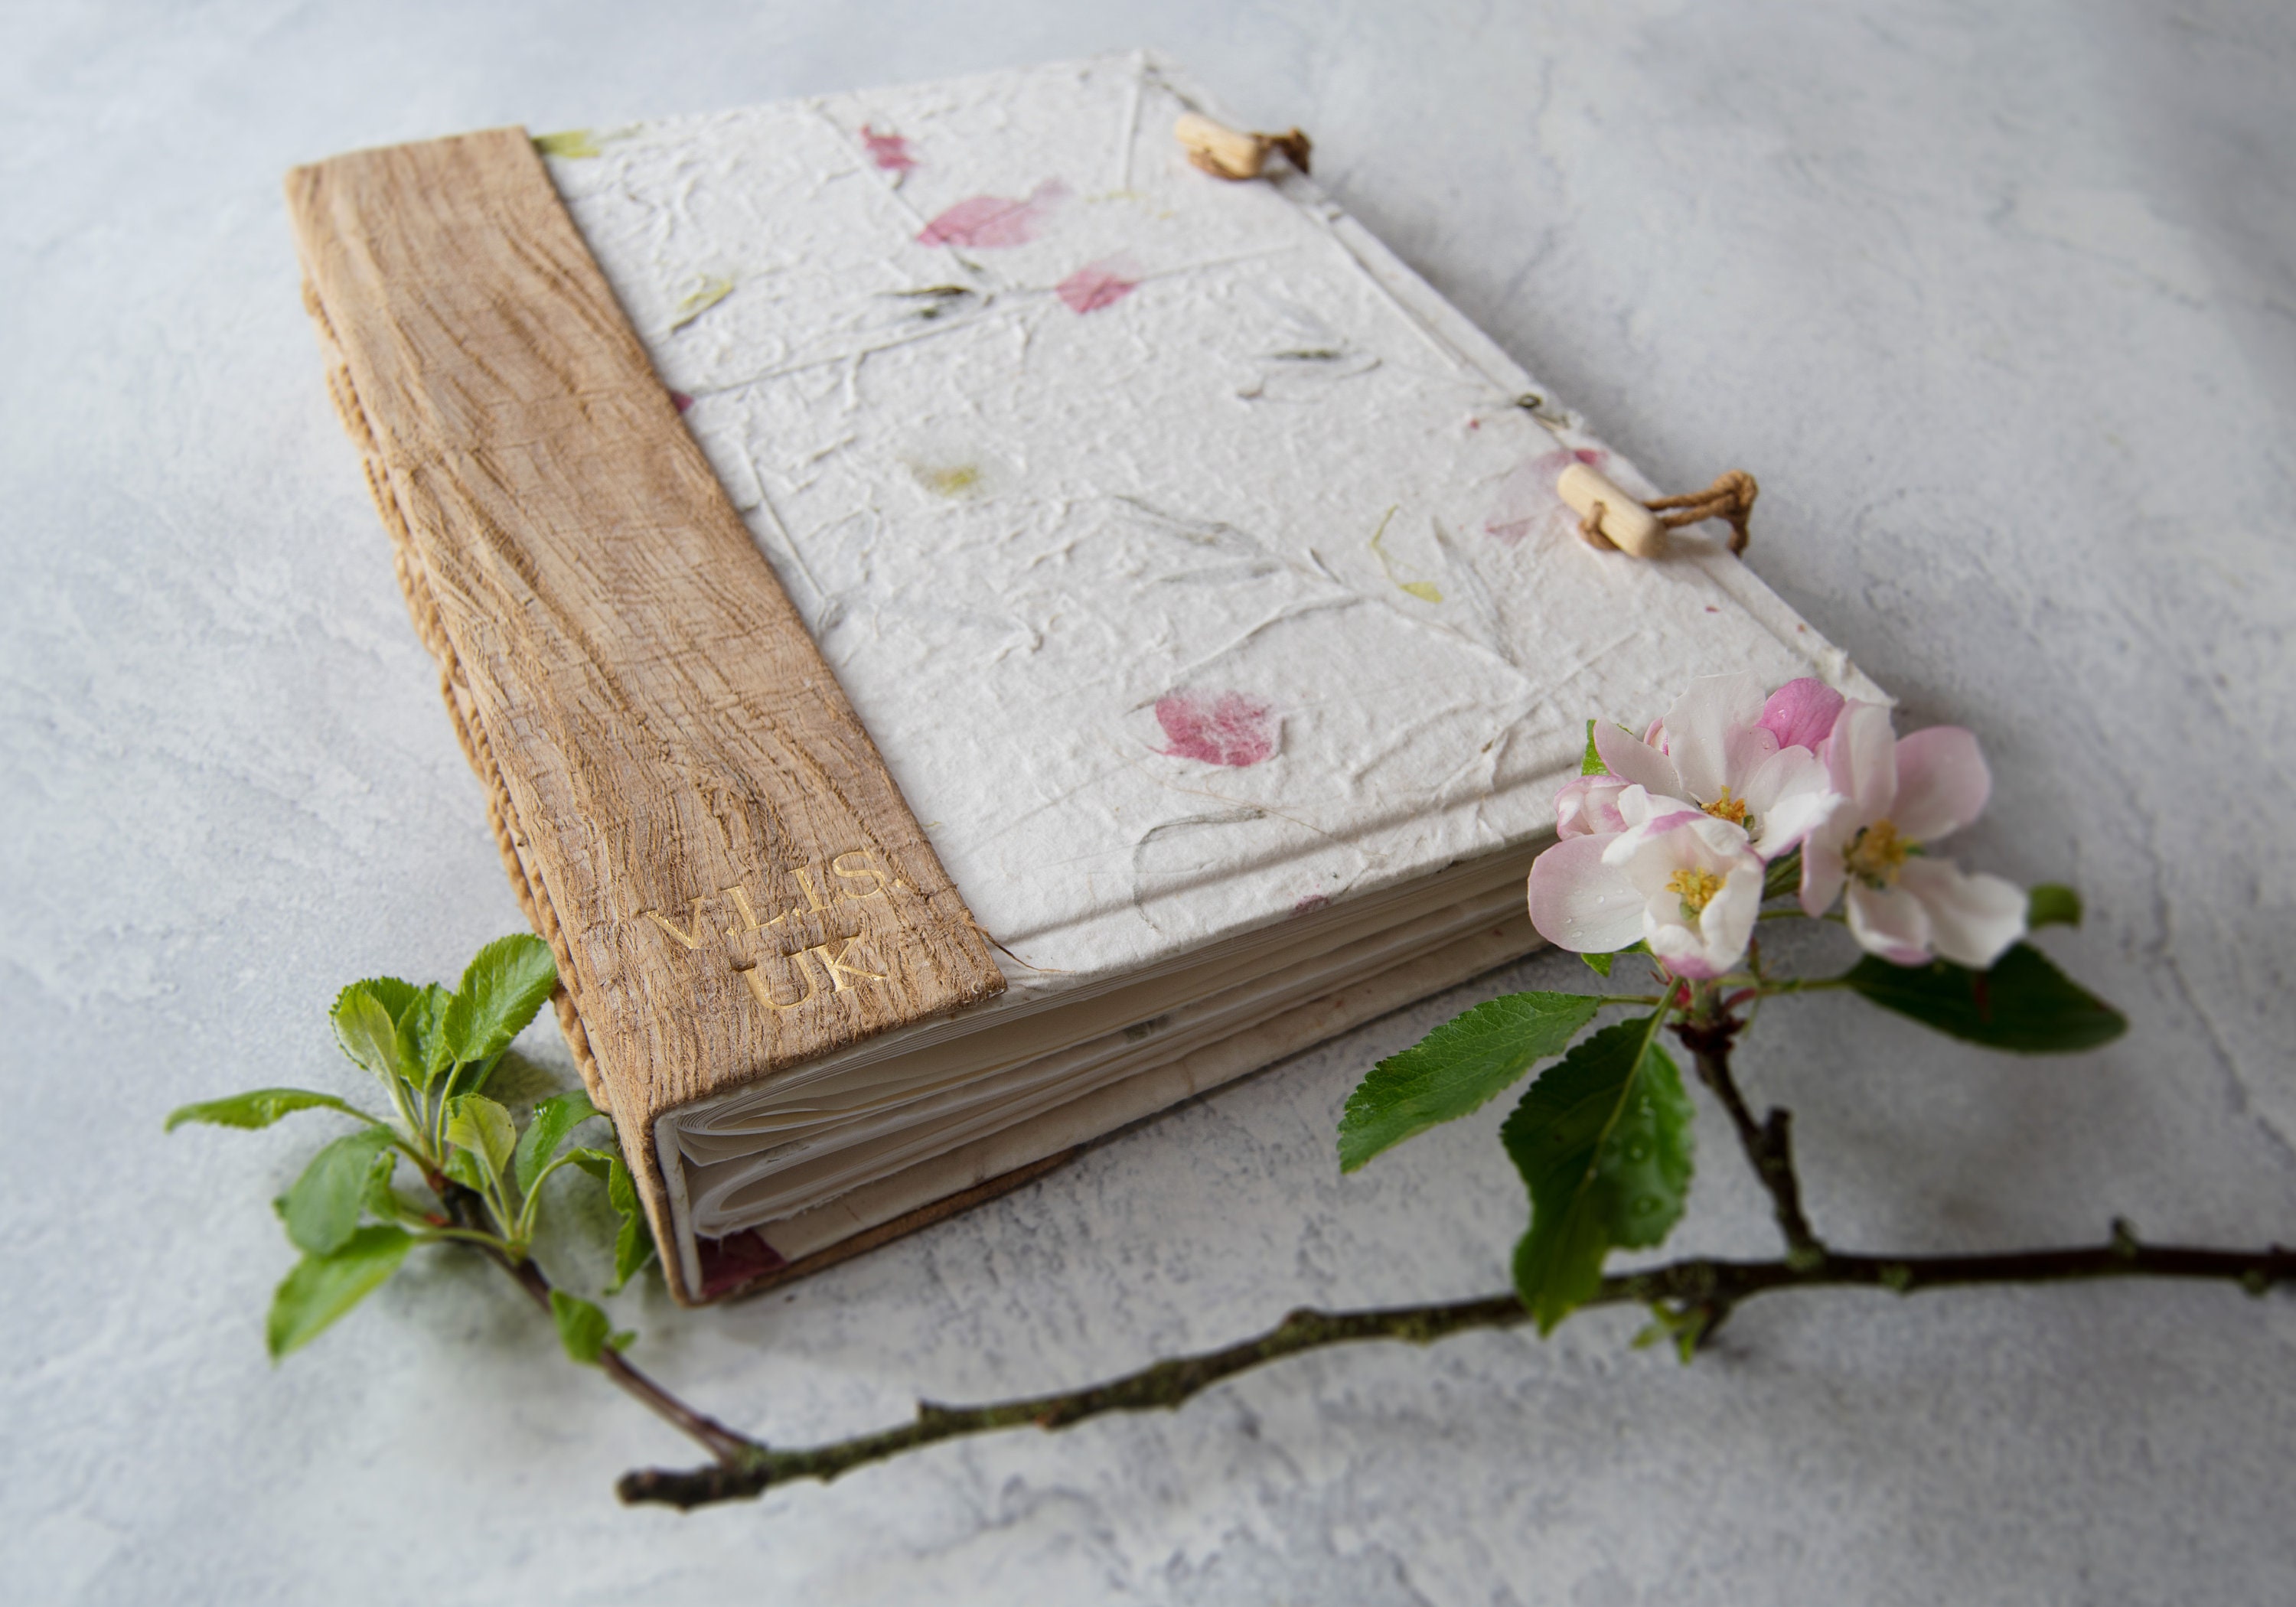 Never Ever Land Scrapbook Album – 12x10 Champagne Scrap Book. Scrapbooking Supplies, Memory Book, Wedding Guest Book, Photo Album, Baby Shower Gifts